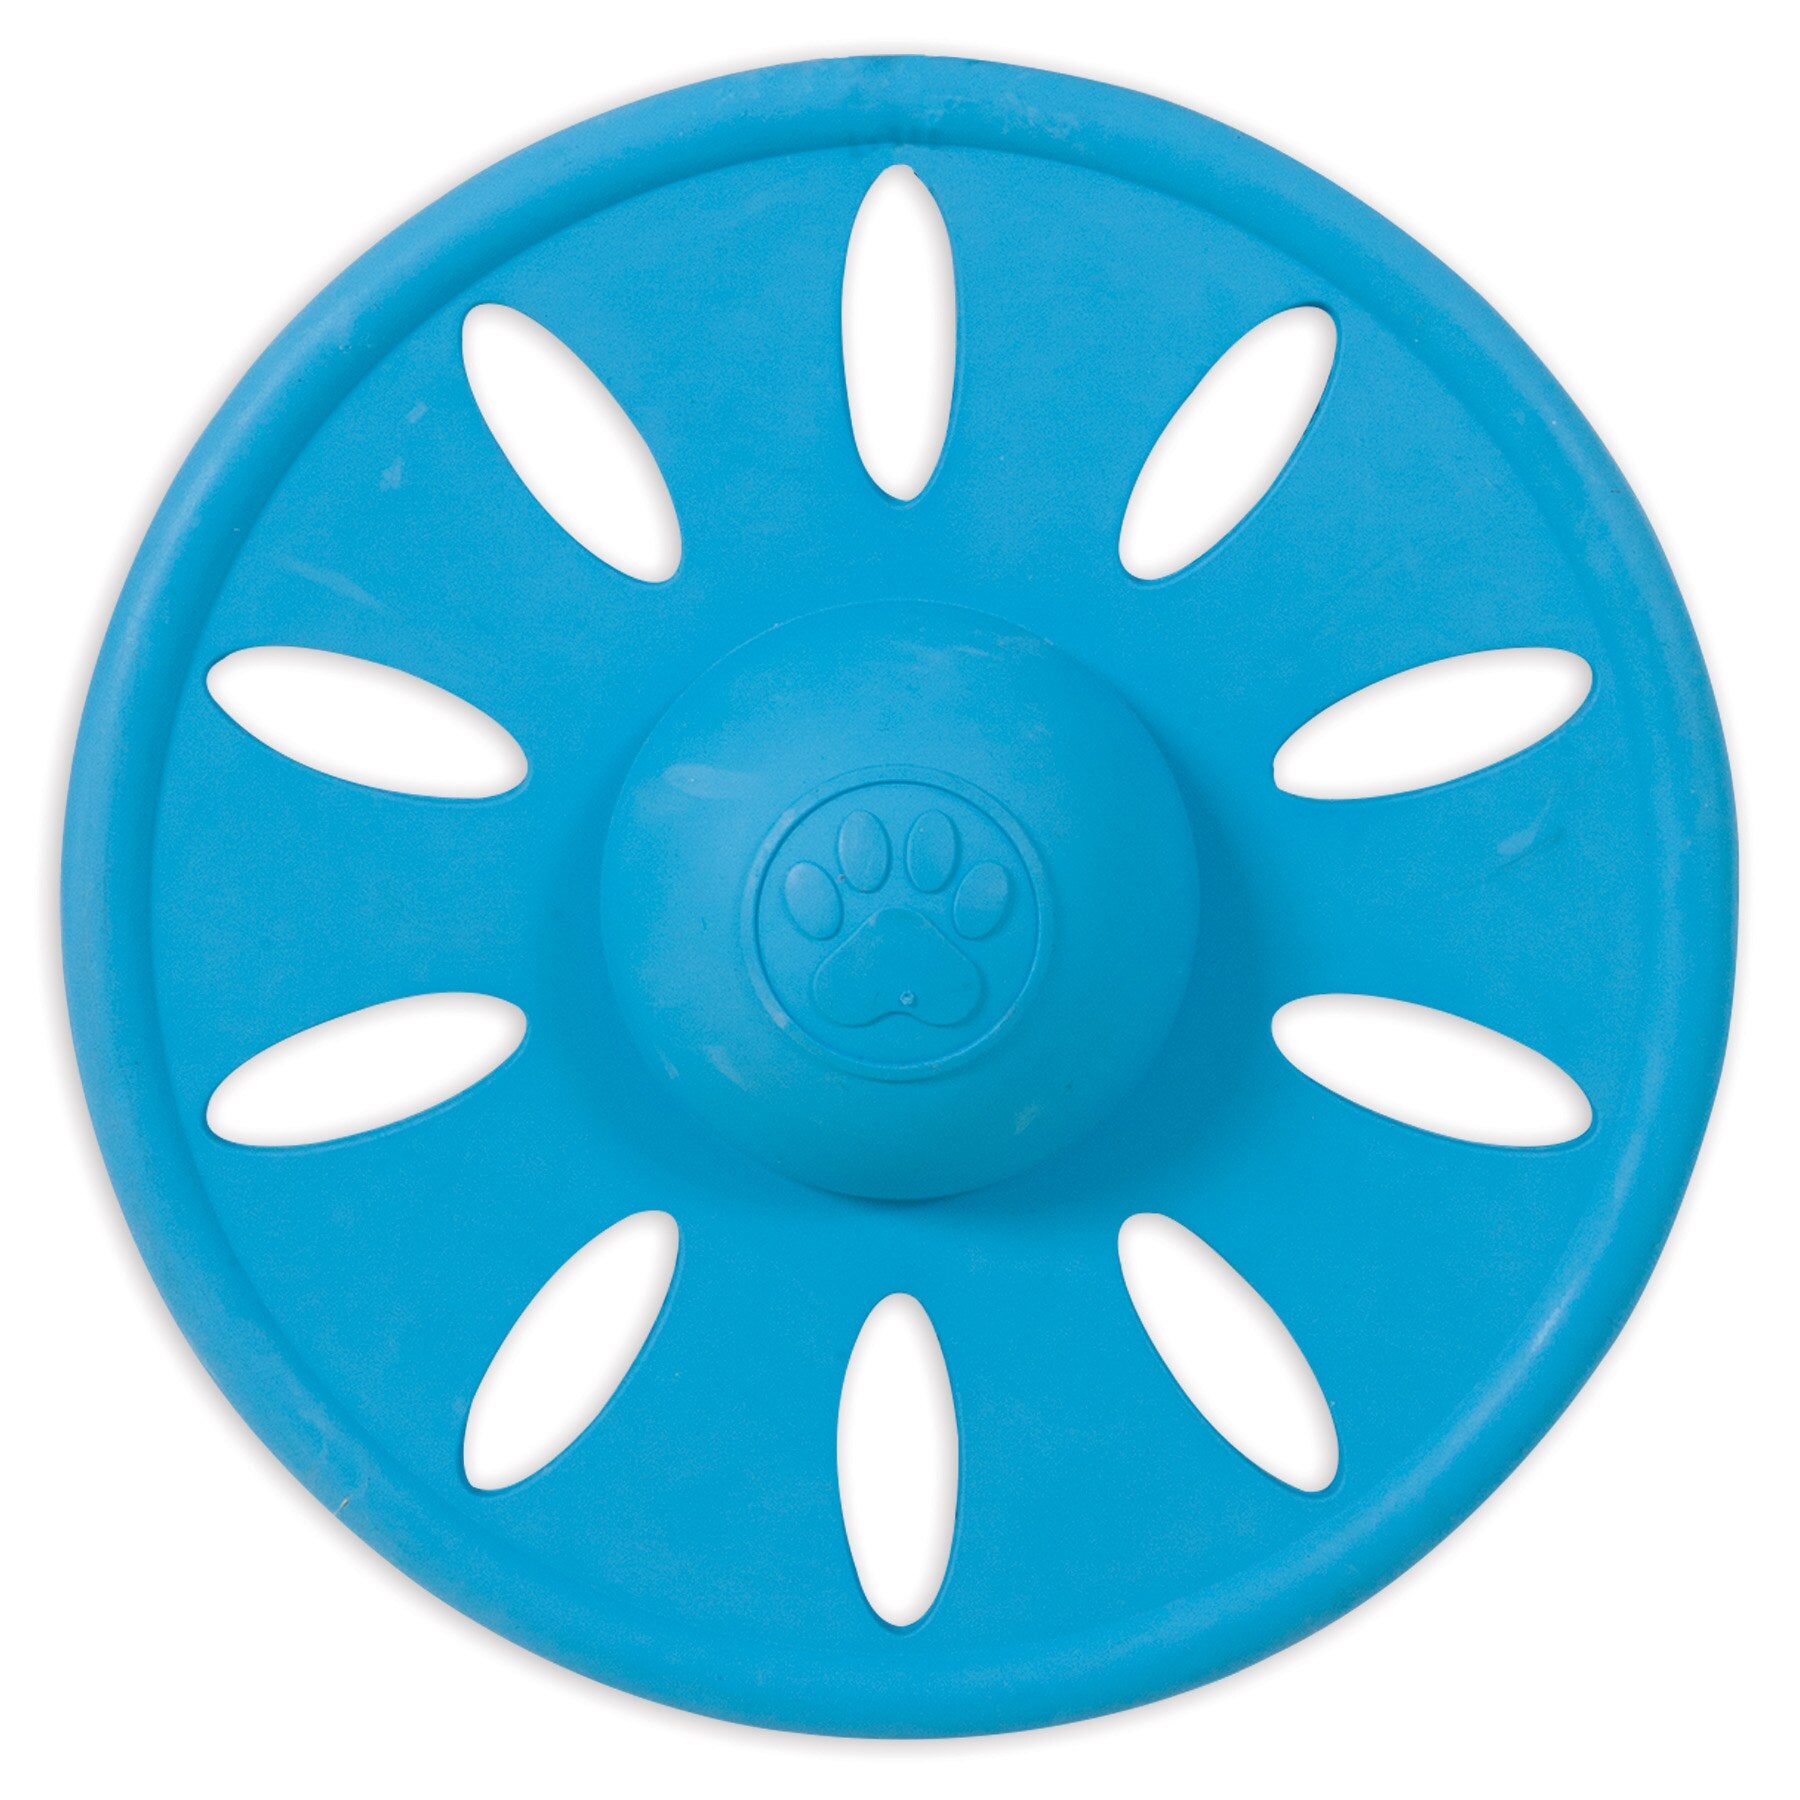 JW Whirlwheel Rubber Disc Dog Toy. SKUS: 43191